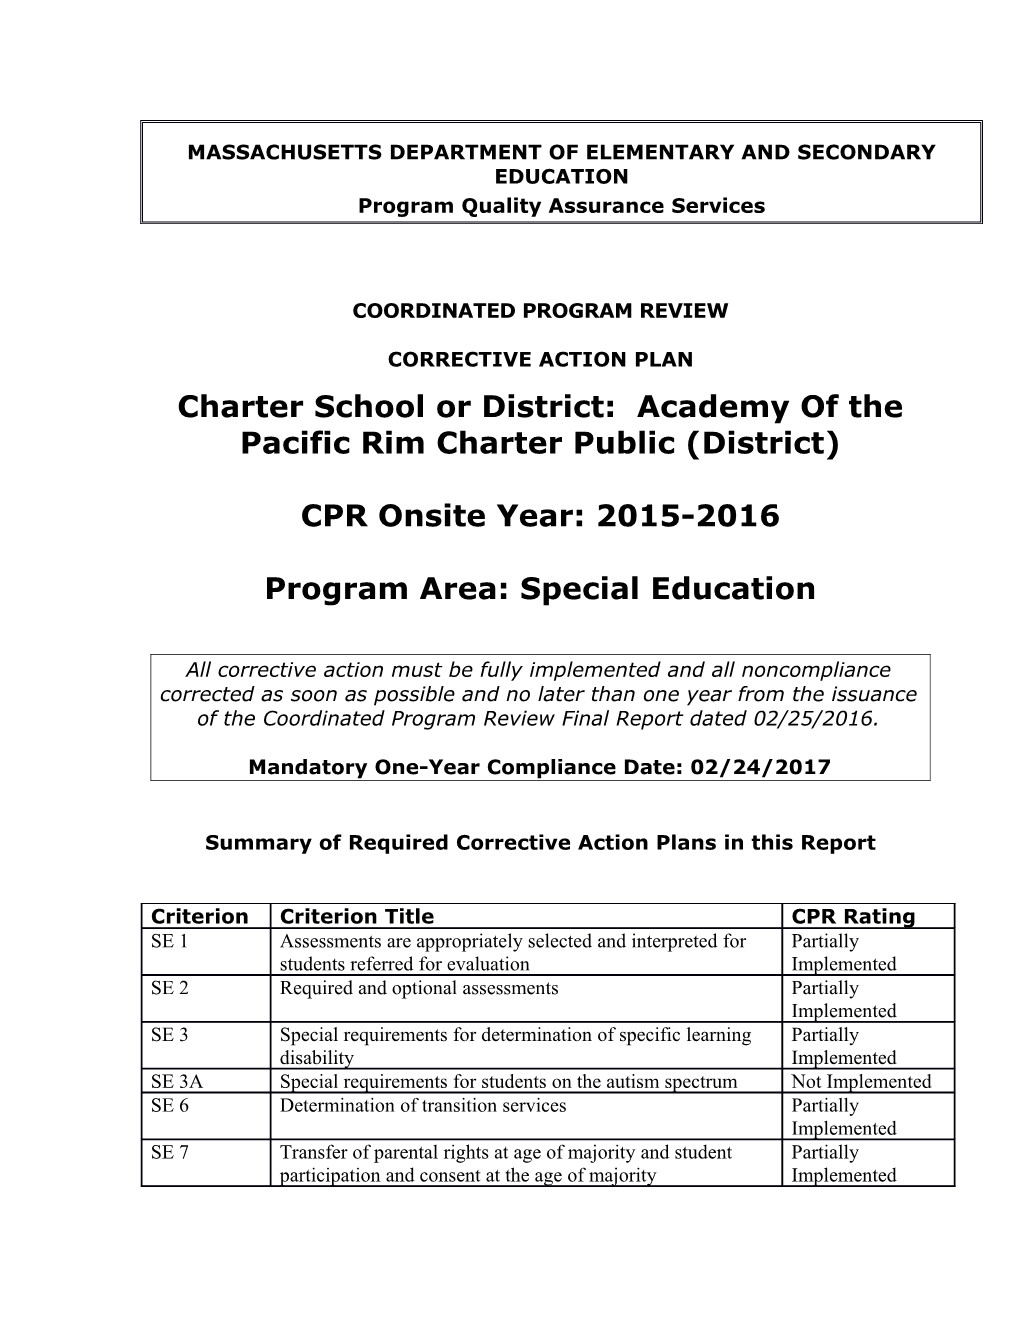 Academy of the Pacific Rim Charter School CAP 2016